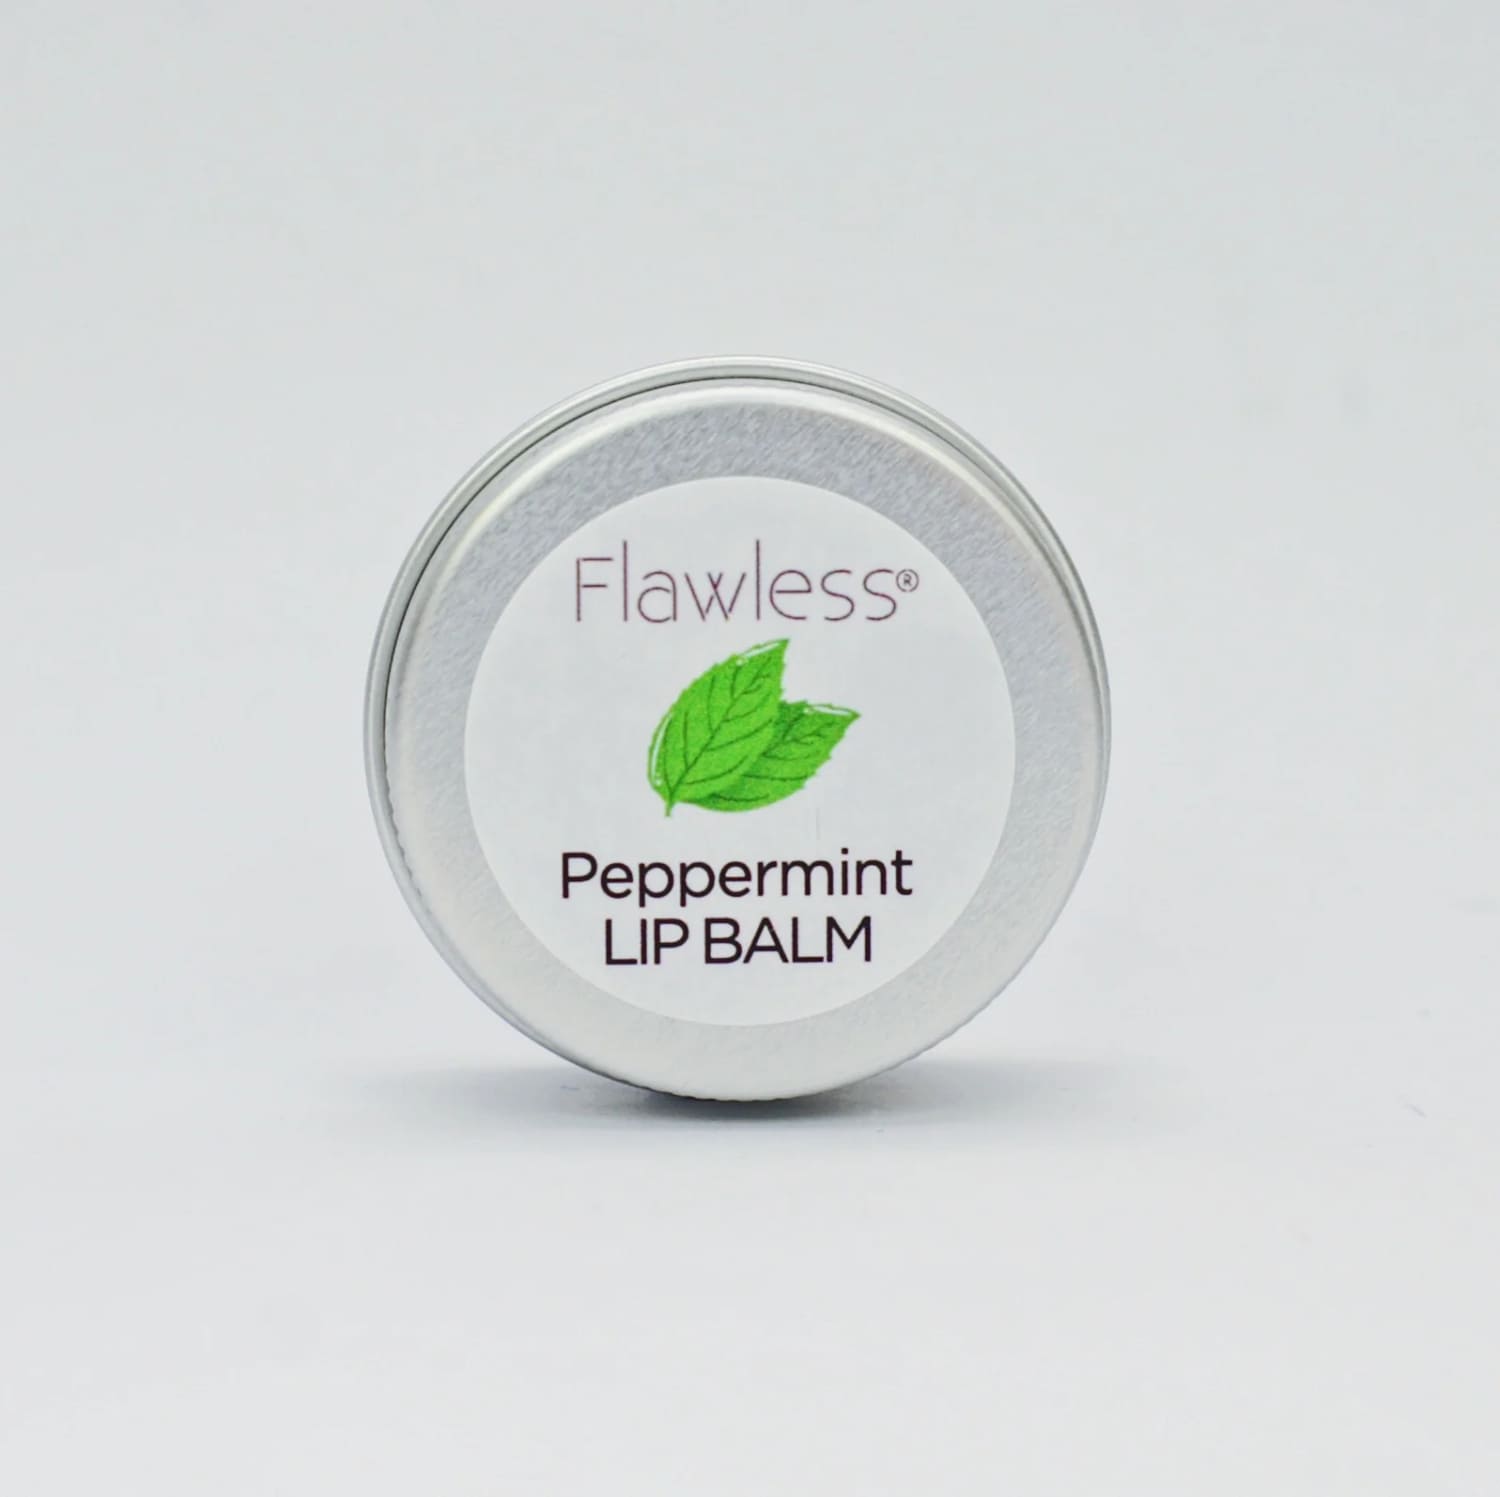 Flawless Peppermint Lip Balm 